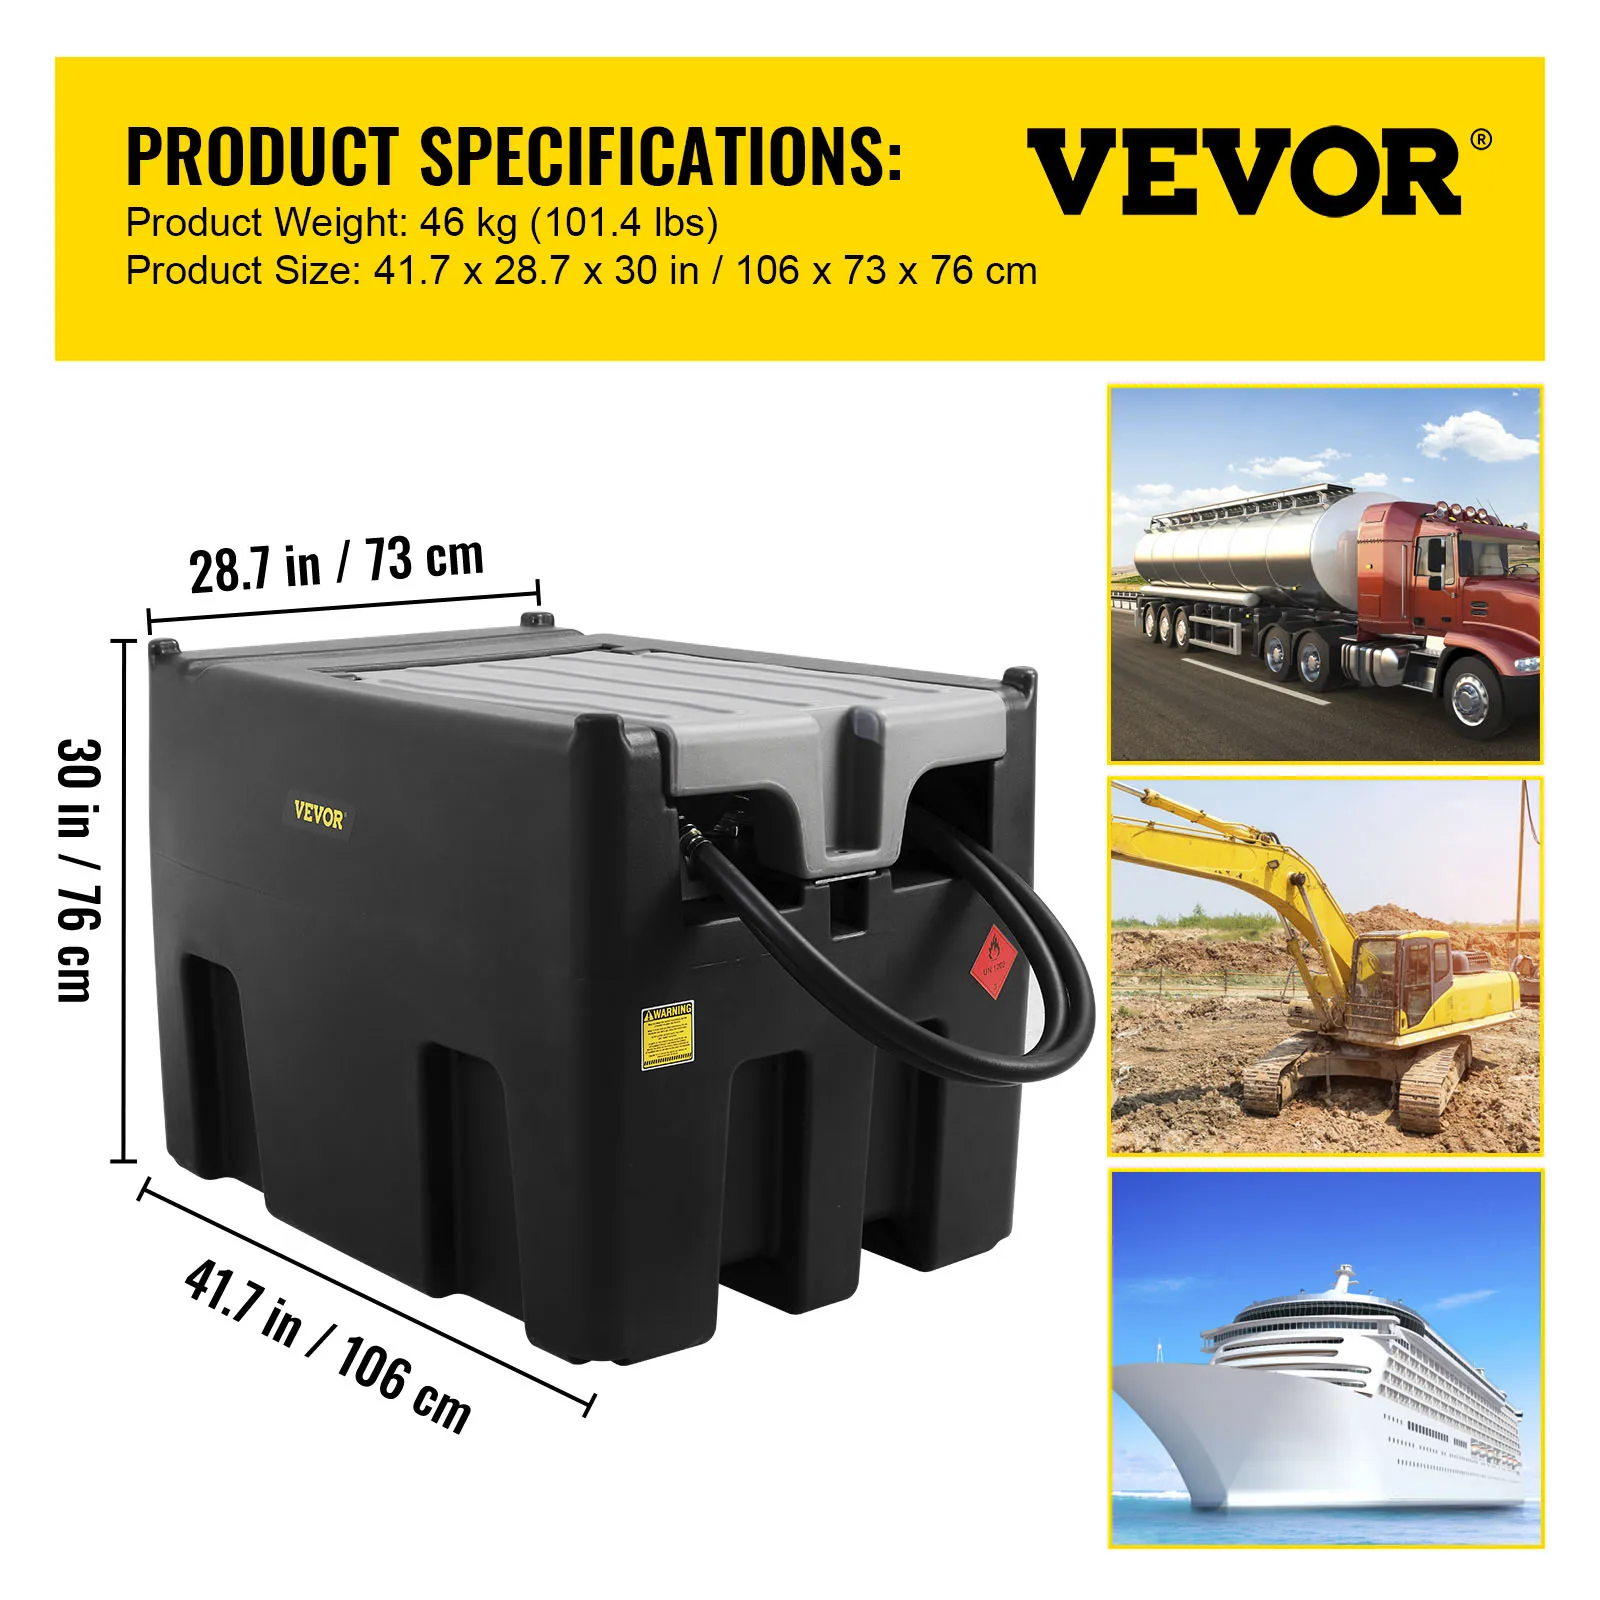 VEVOR Portable 58 Gallon Diesel Fuel Tank with 12V Electric Transfer Pump,  Polyethylene Construction for Easy Transportation - Black